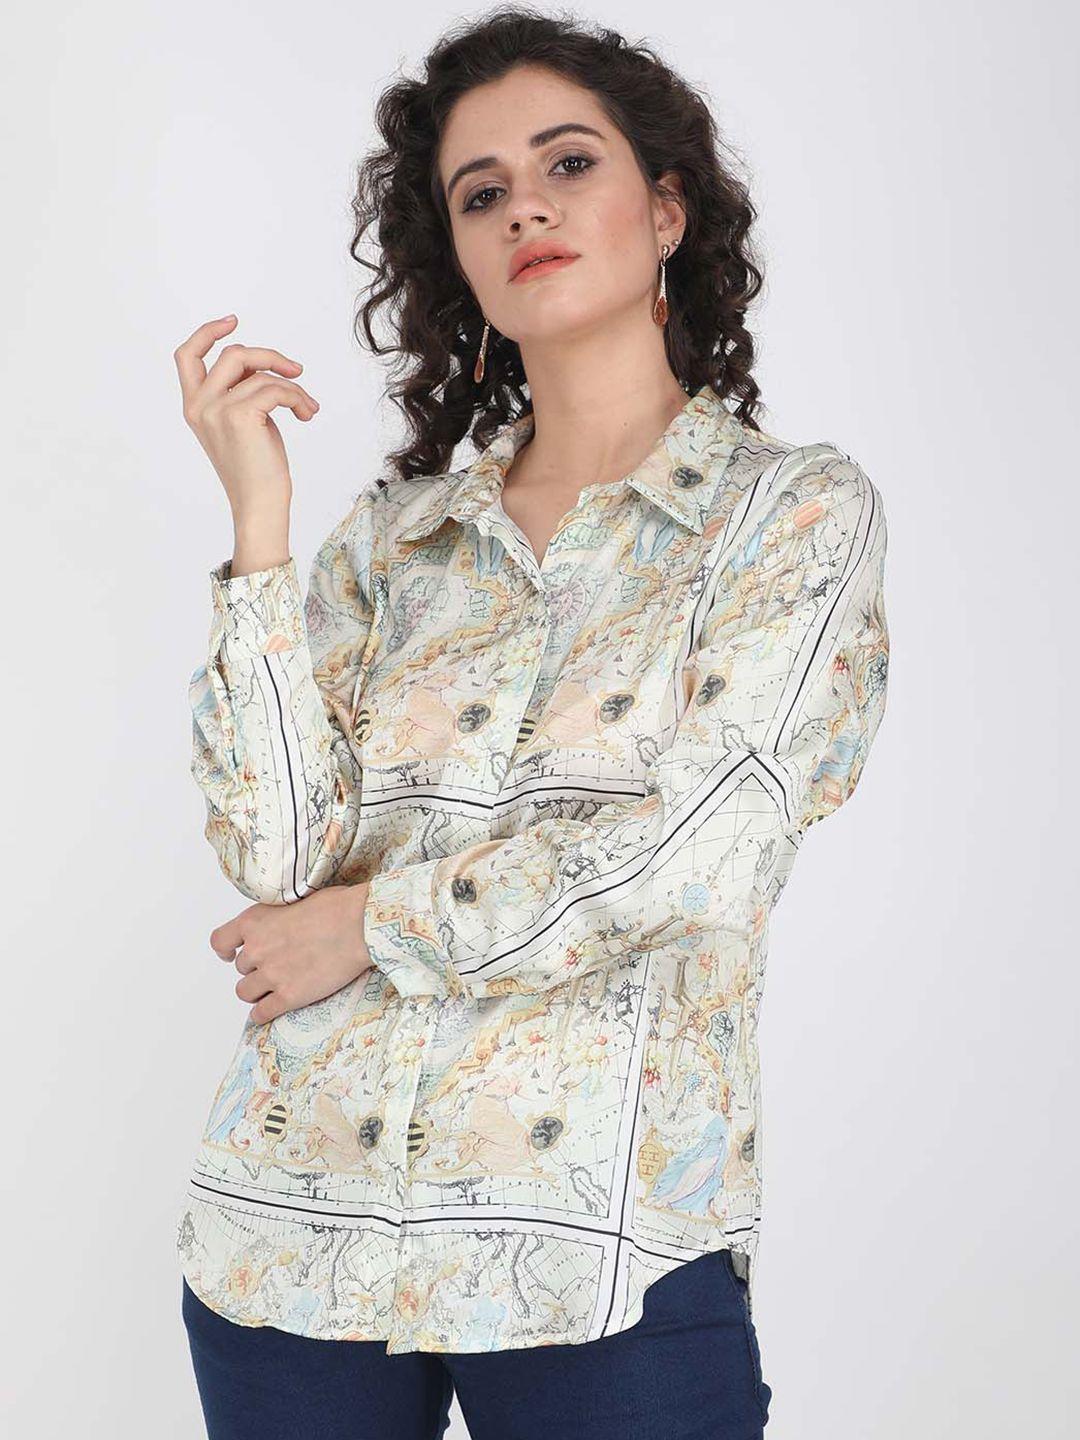 angloindu women off white & peach-coloured print shirt style top